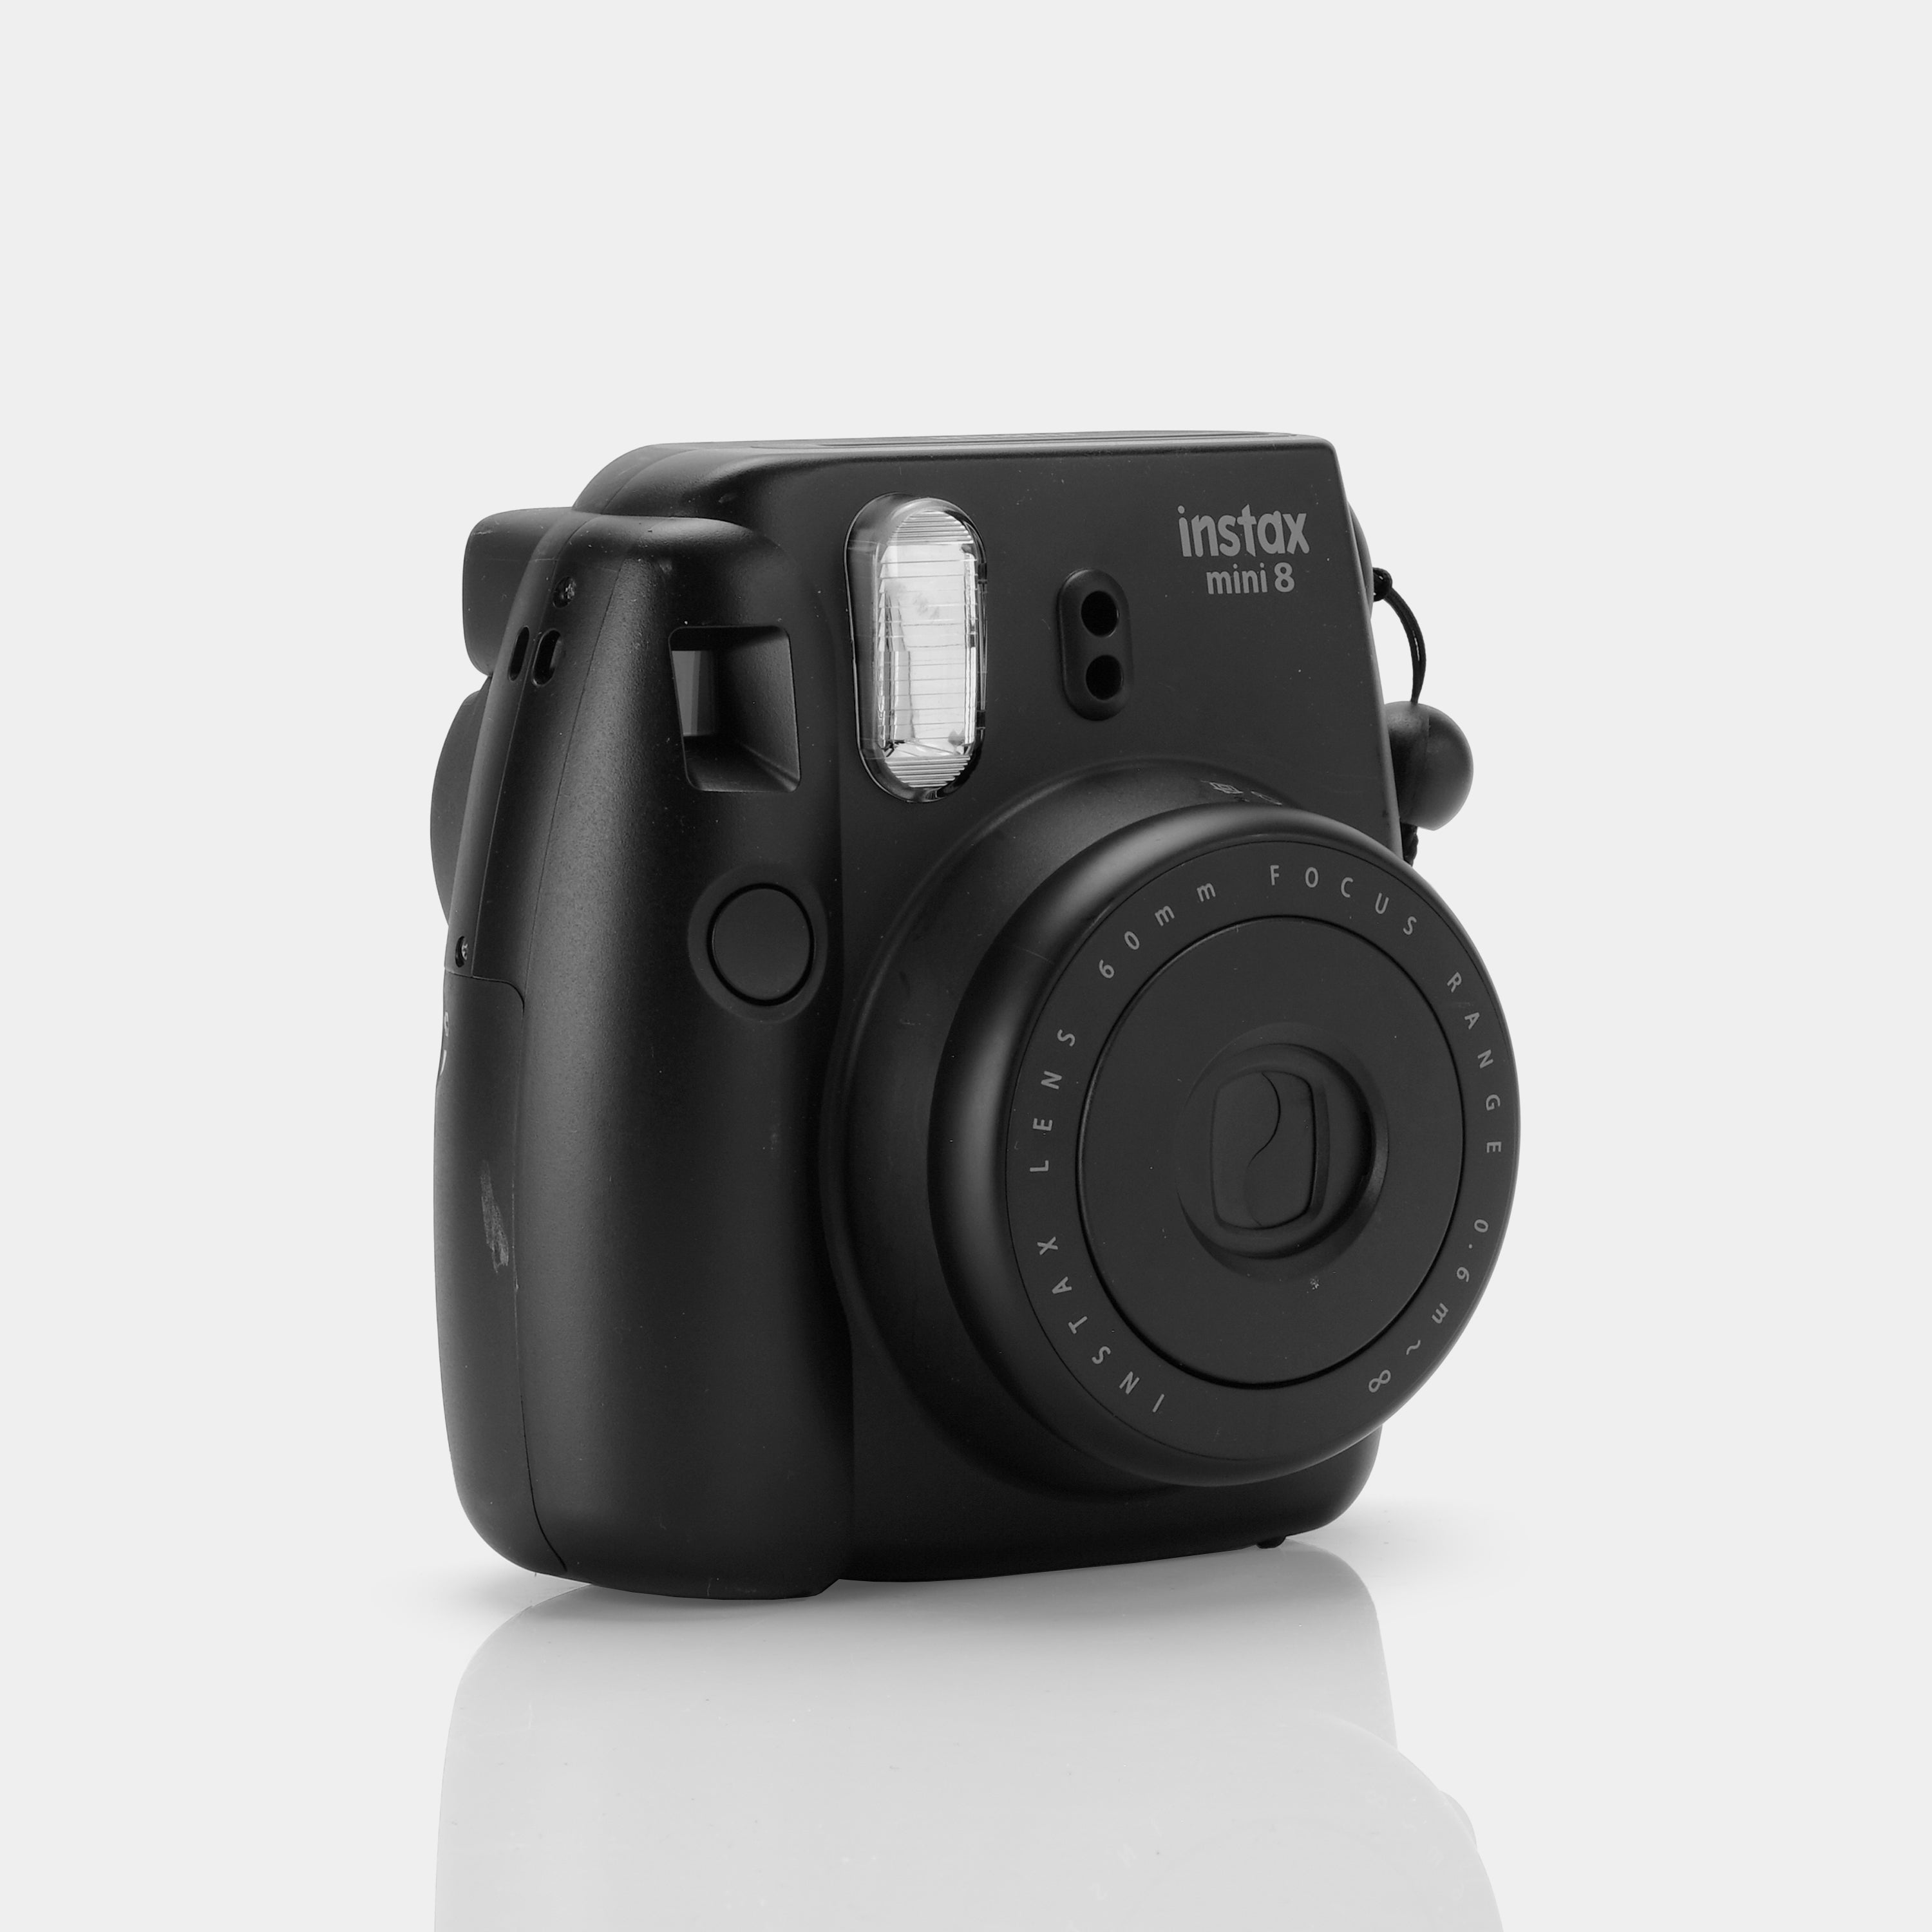 Fujifilm Instax Mini 8 Black Instant Film Camera With Black Bag - Refurbished